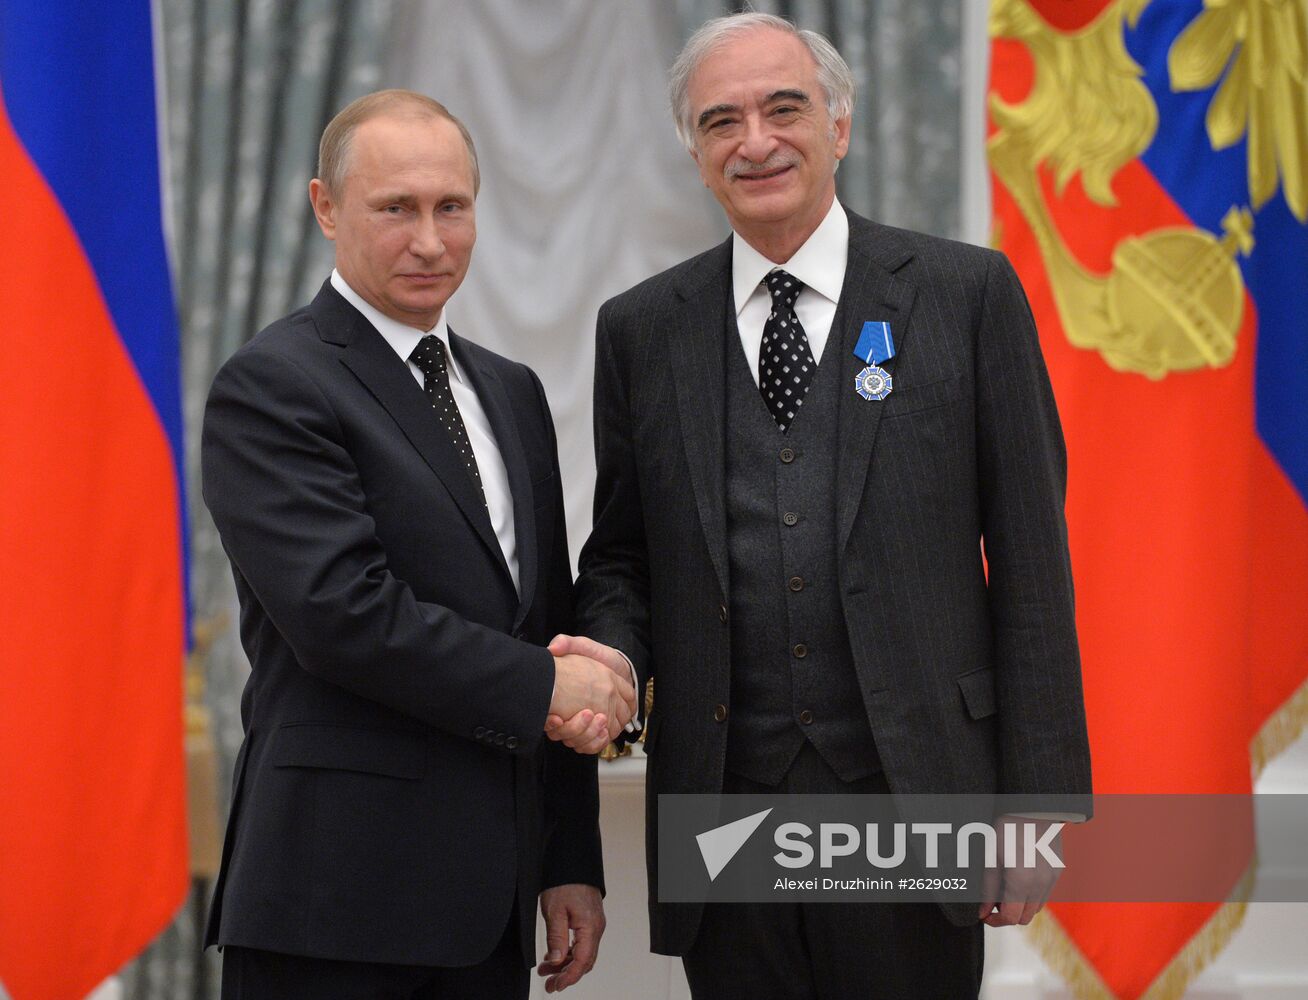 Russian President Vladimir Putin presents state awards in the Kremlin